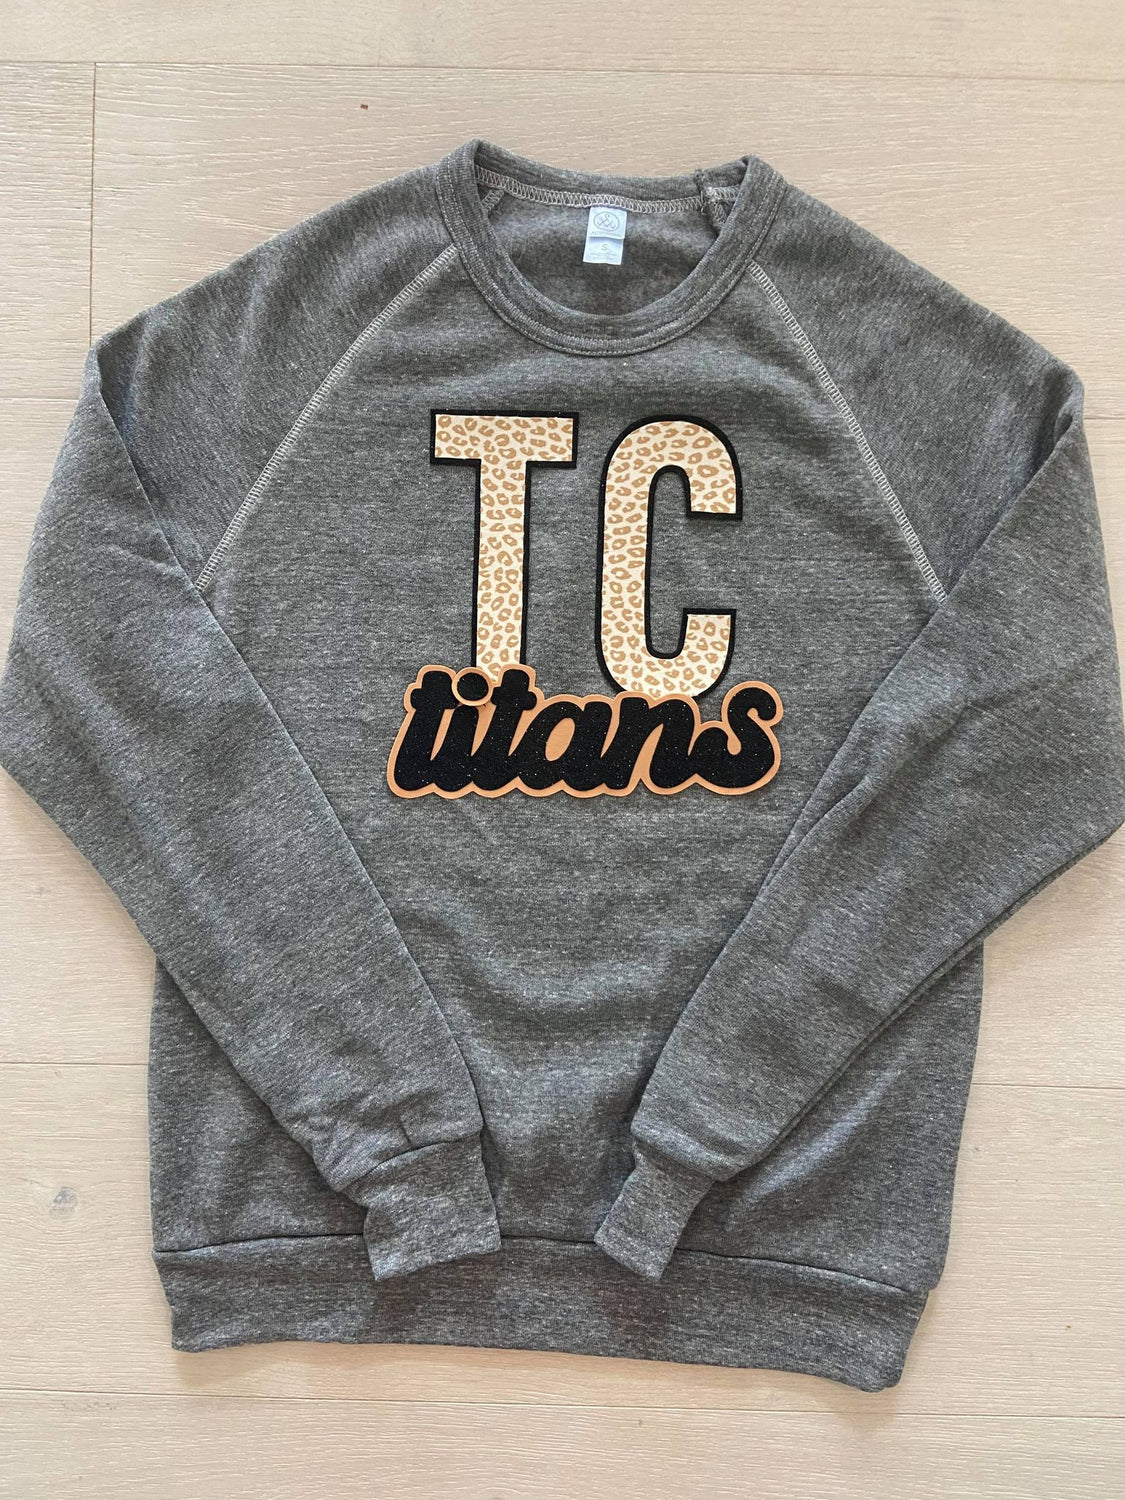 TC TITANS (YOUTH + ADULT)